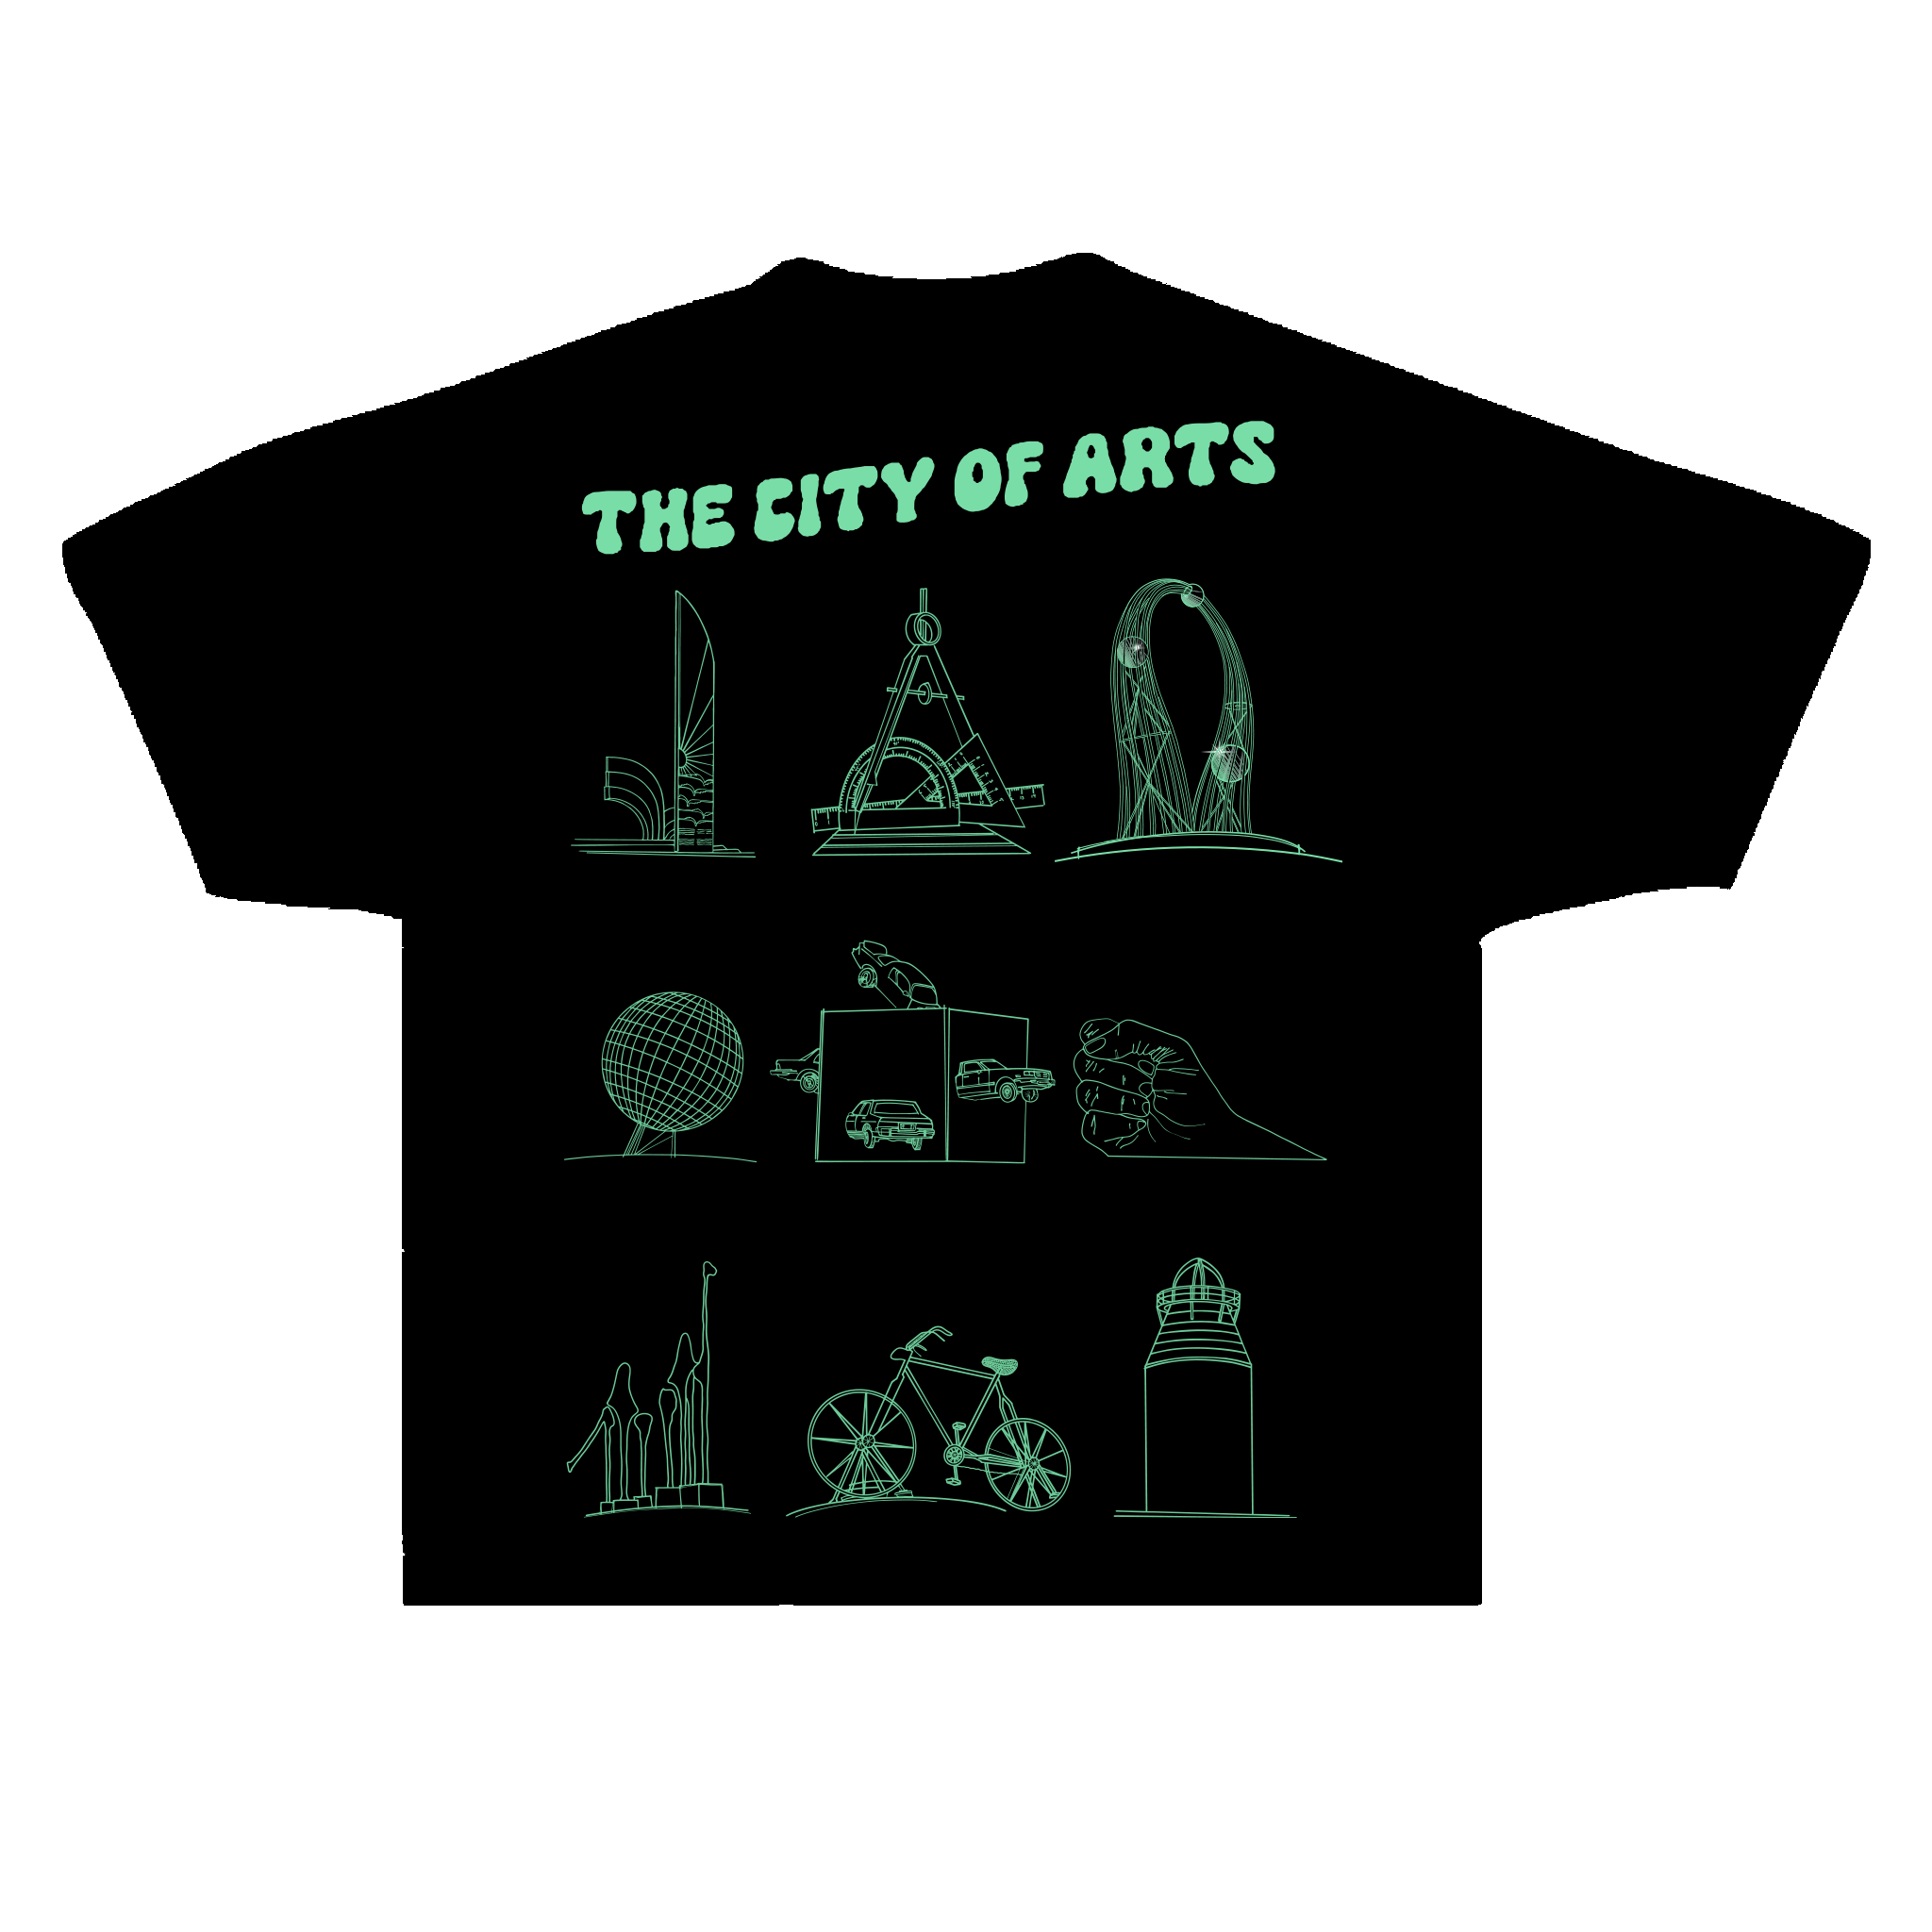 18Pieces - City Of Arts v2 Black